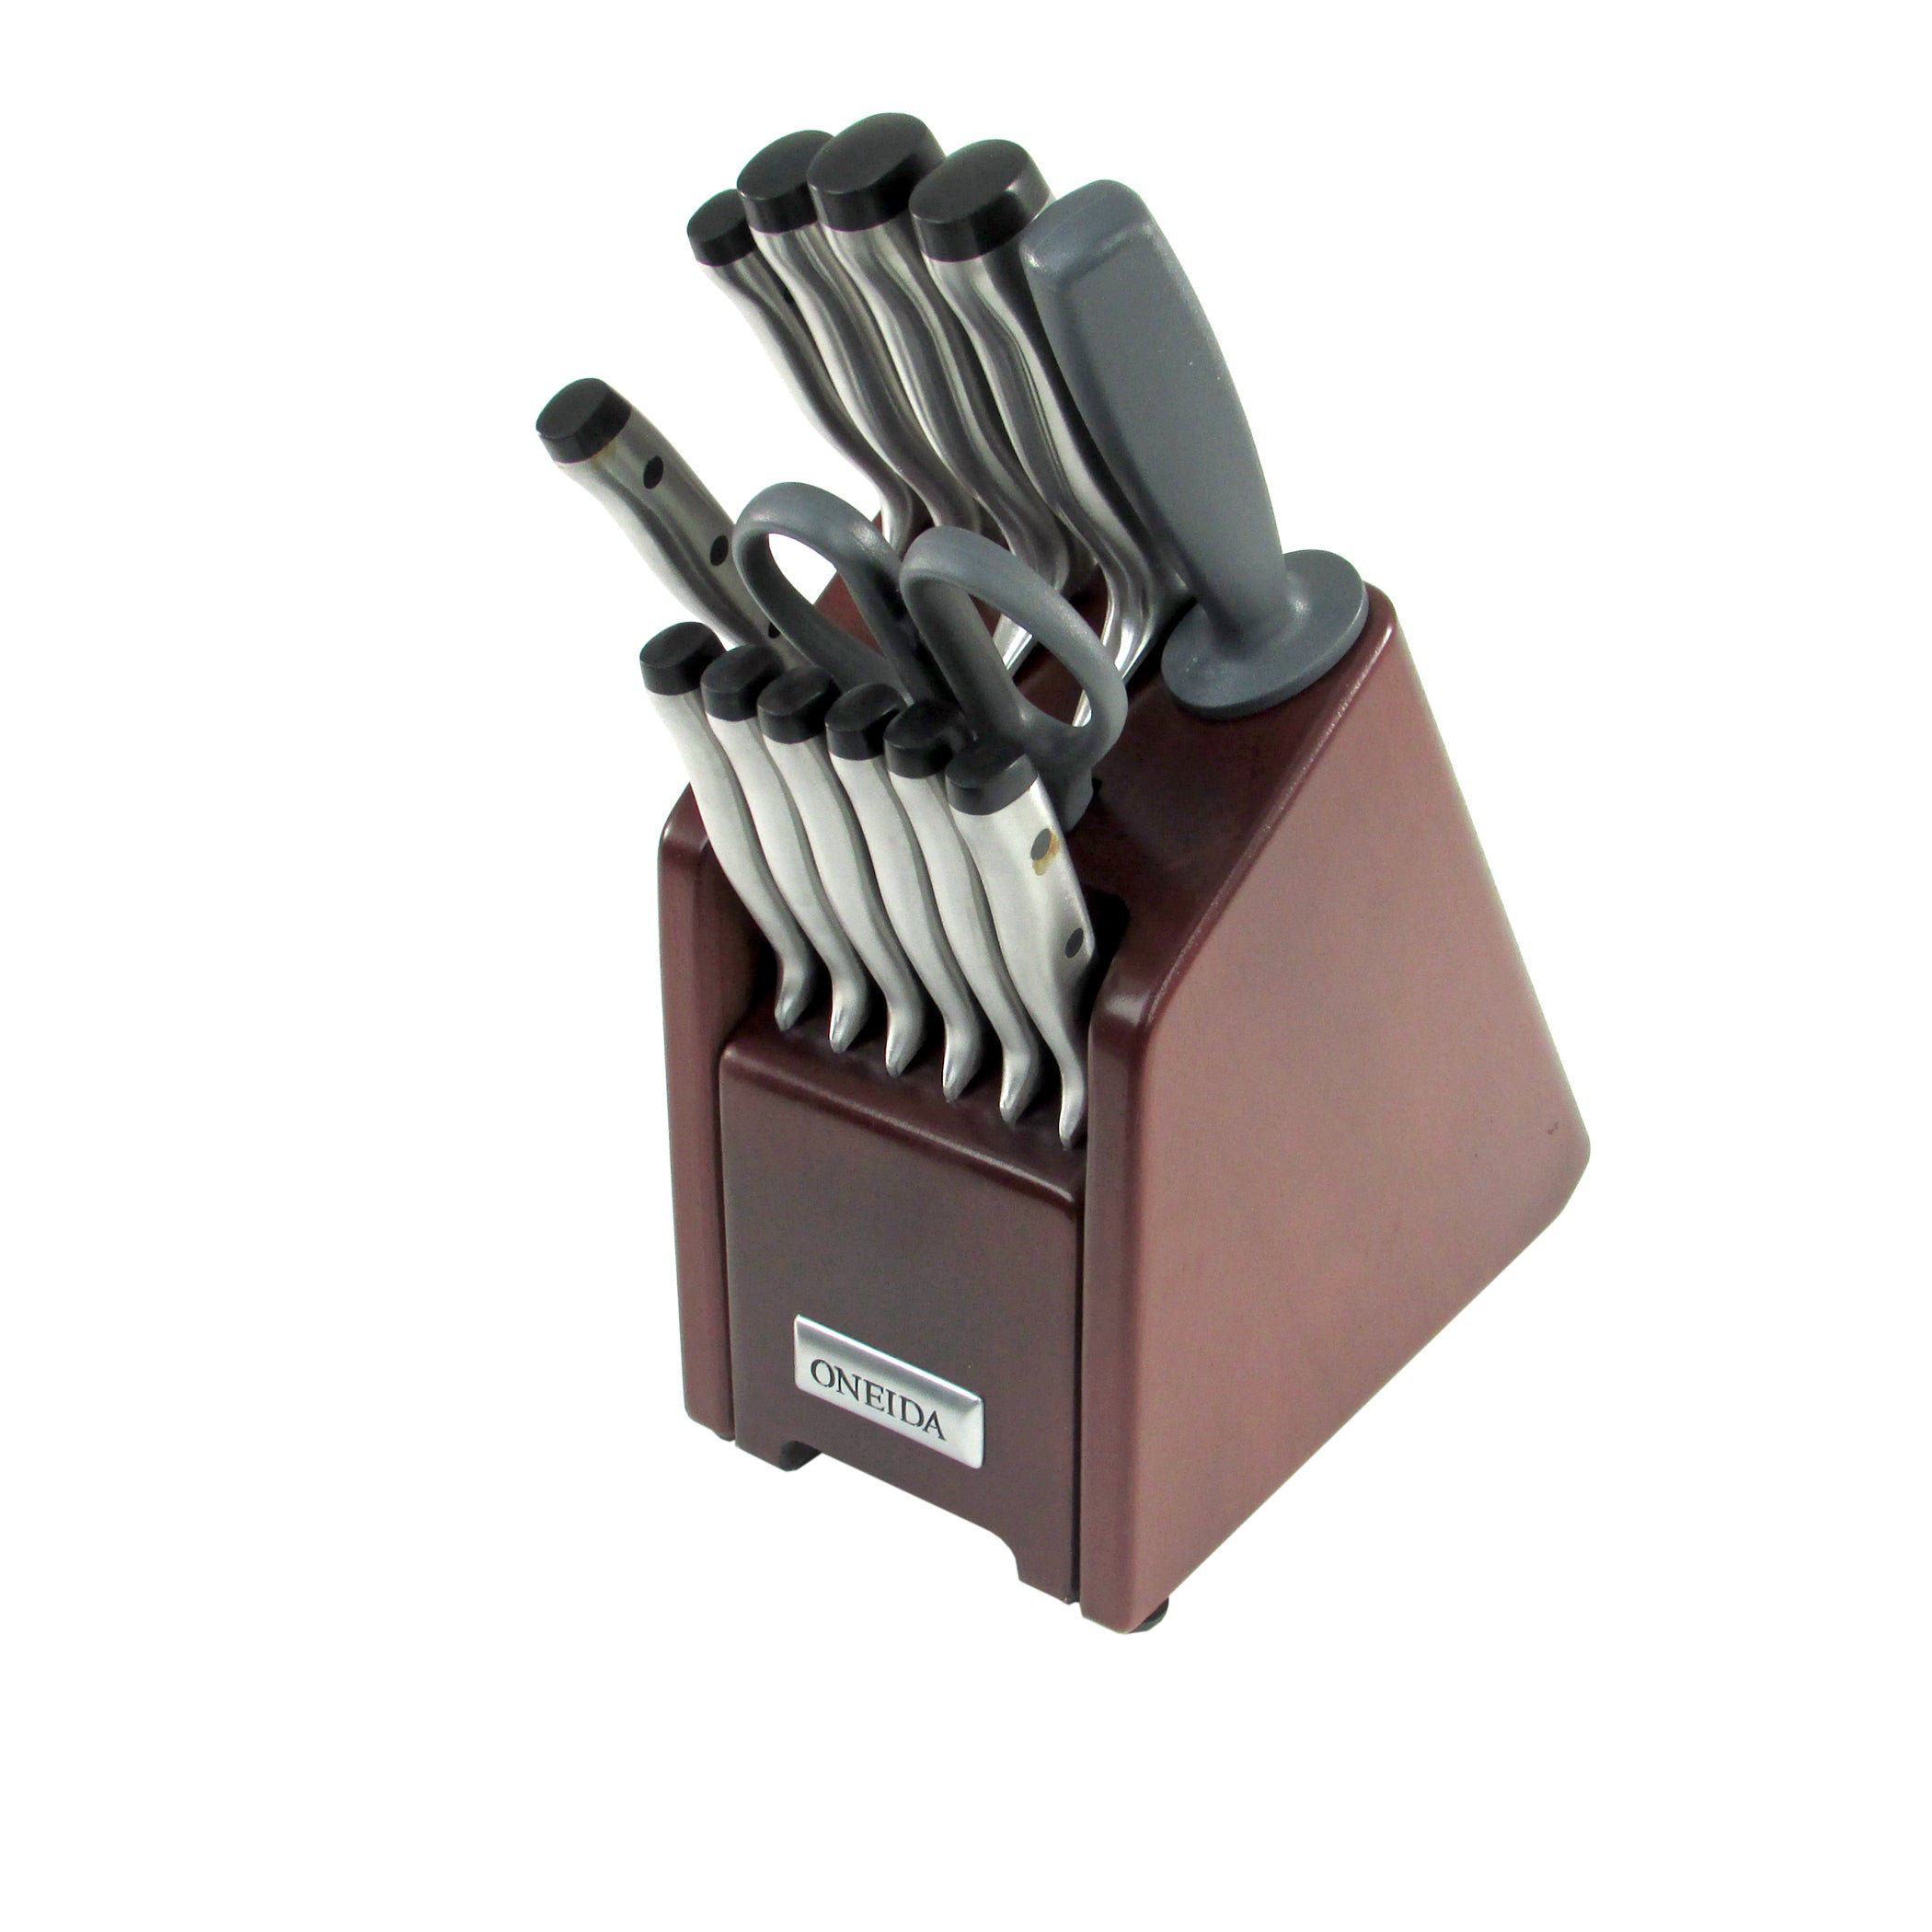 ONEIDA 14pc Cutlery Block Set w/Sharpener